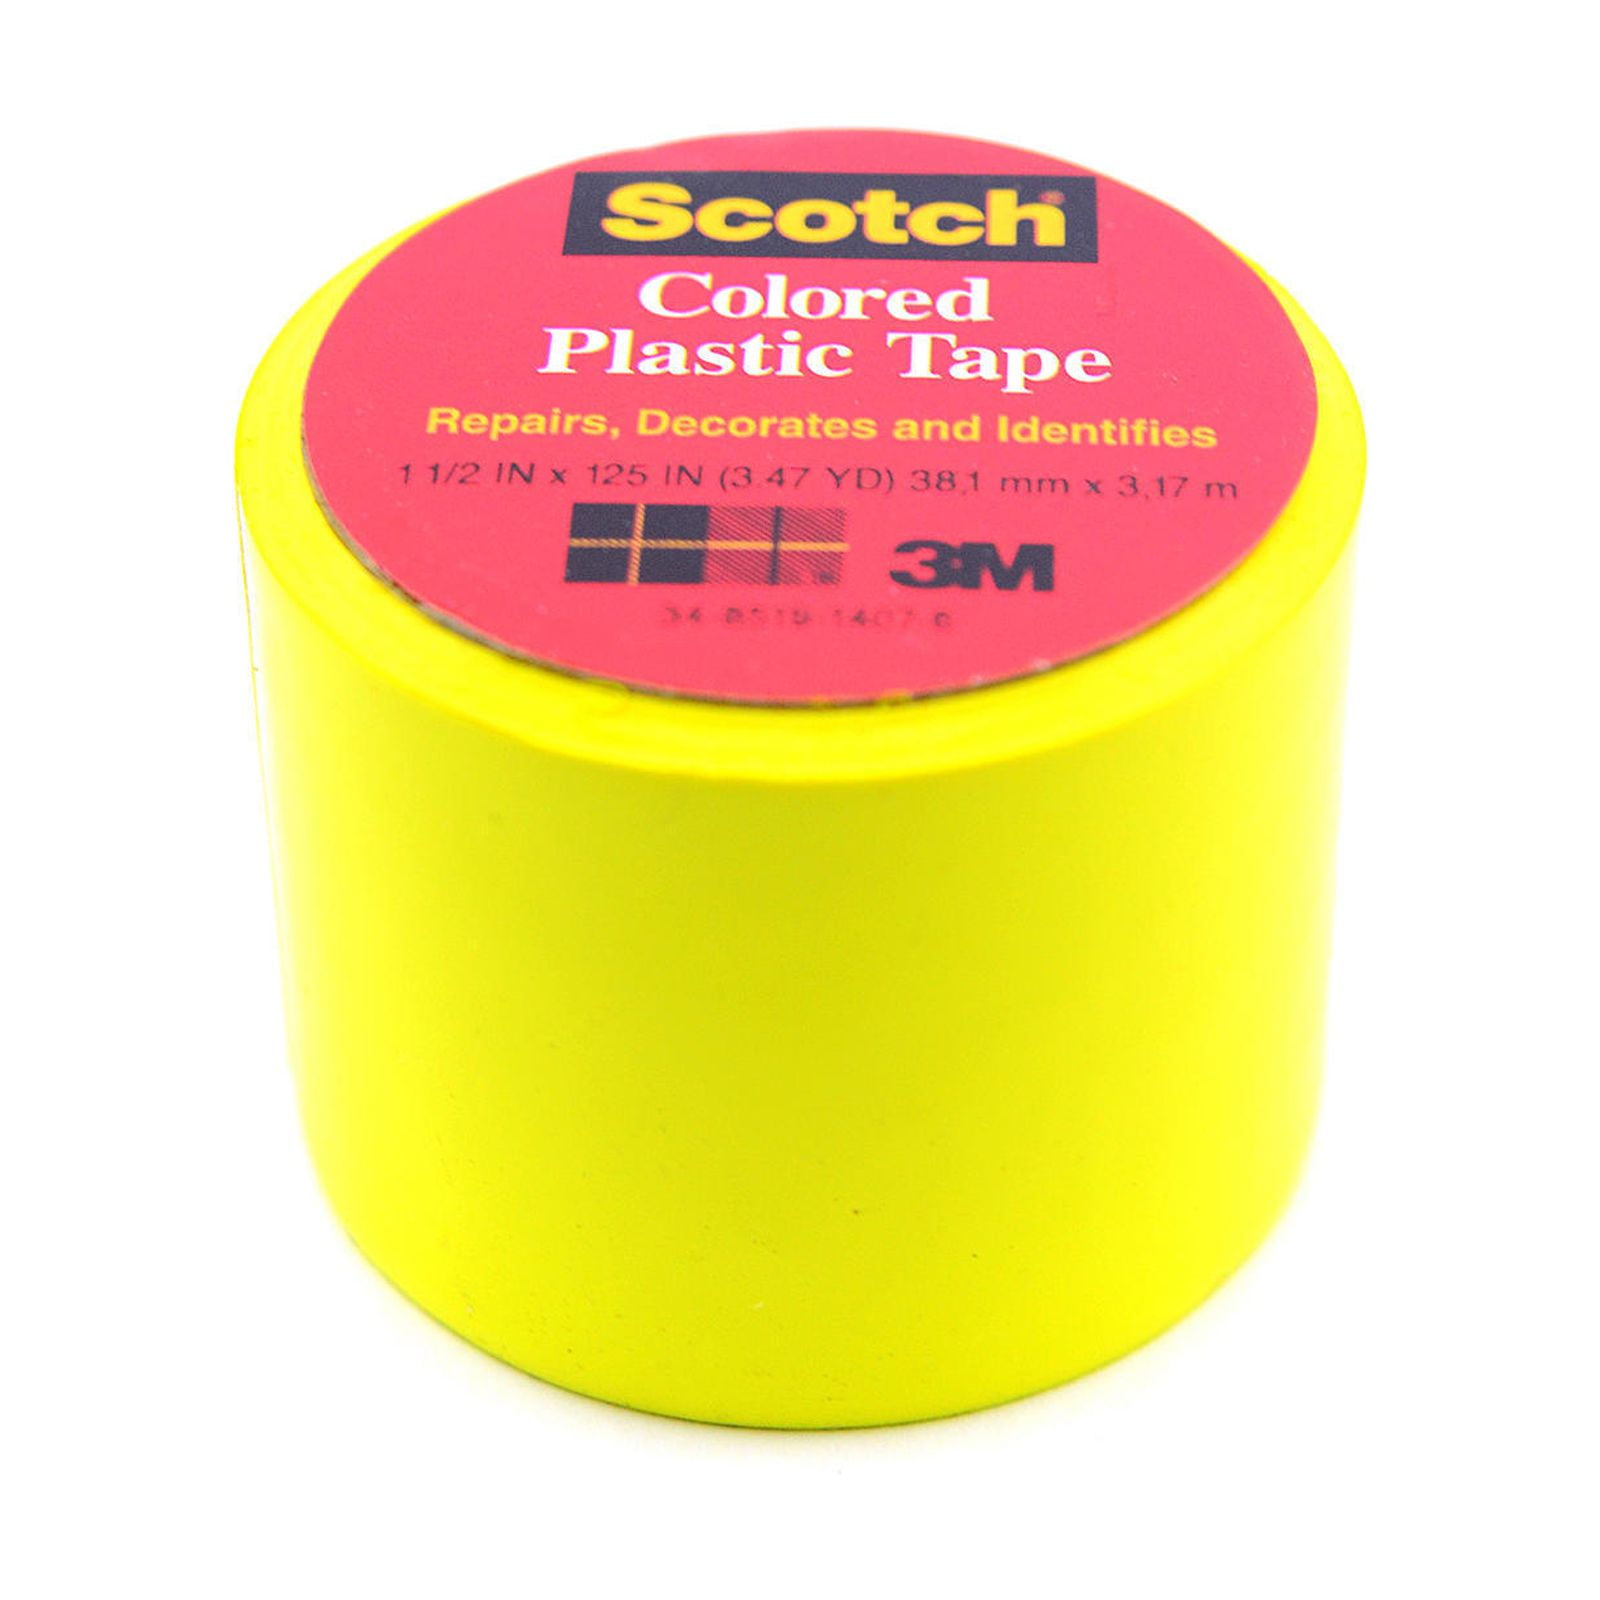 Scotch Colored Plastic Tape (1-1/2)